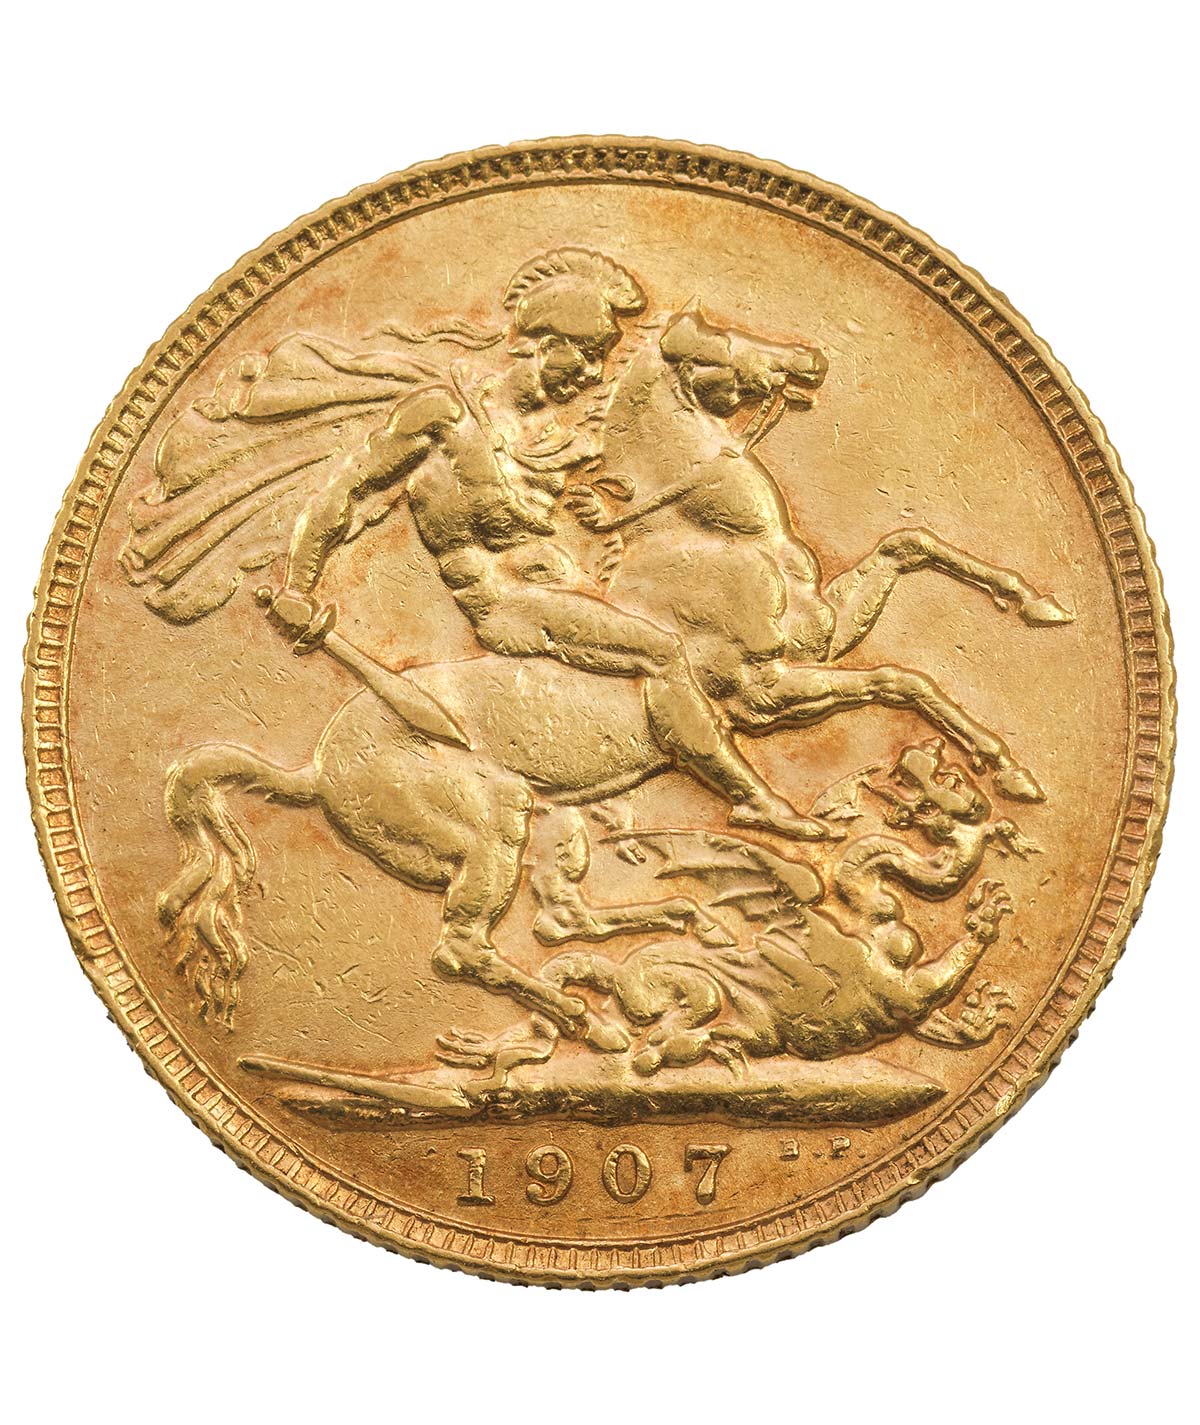 Perspetiva frontal de la cruz de la moneda de oro Soberano de Eduardo VII de 1907, acuñada por The Royal Mint